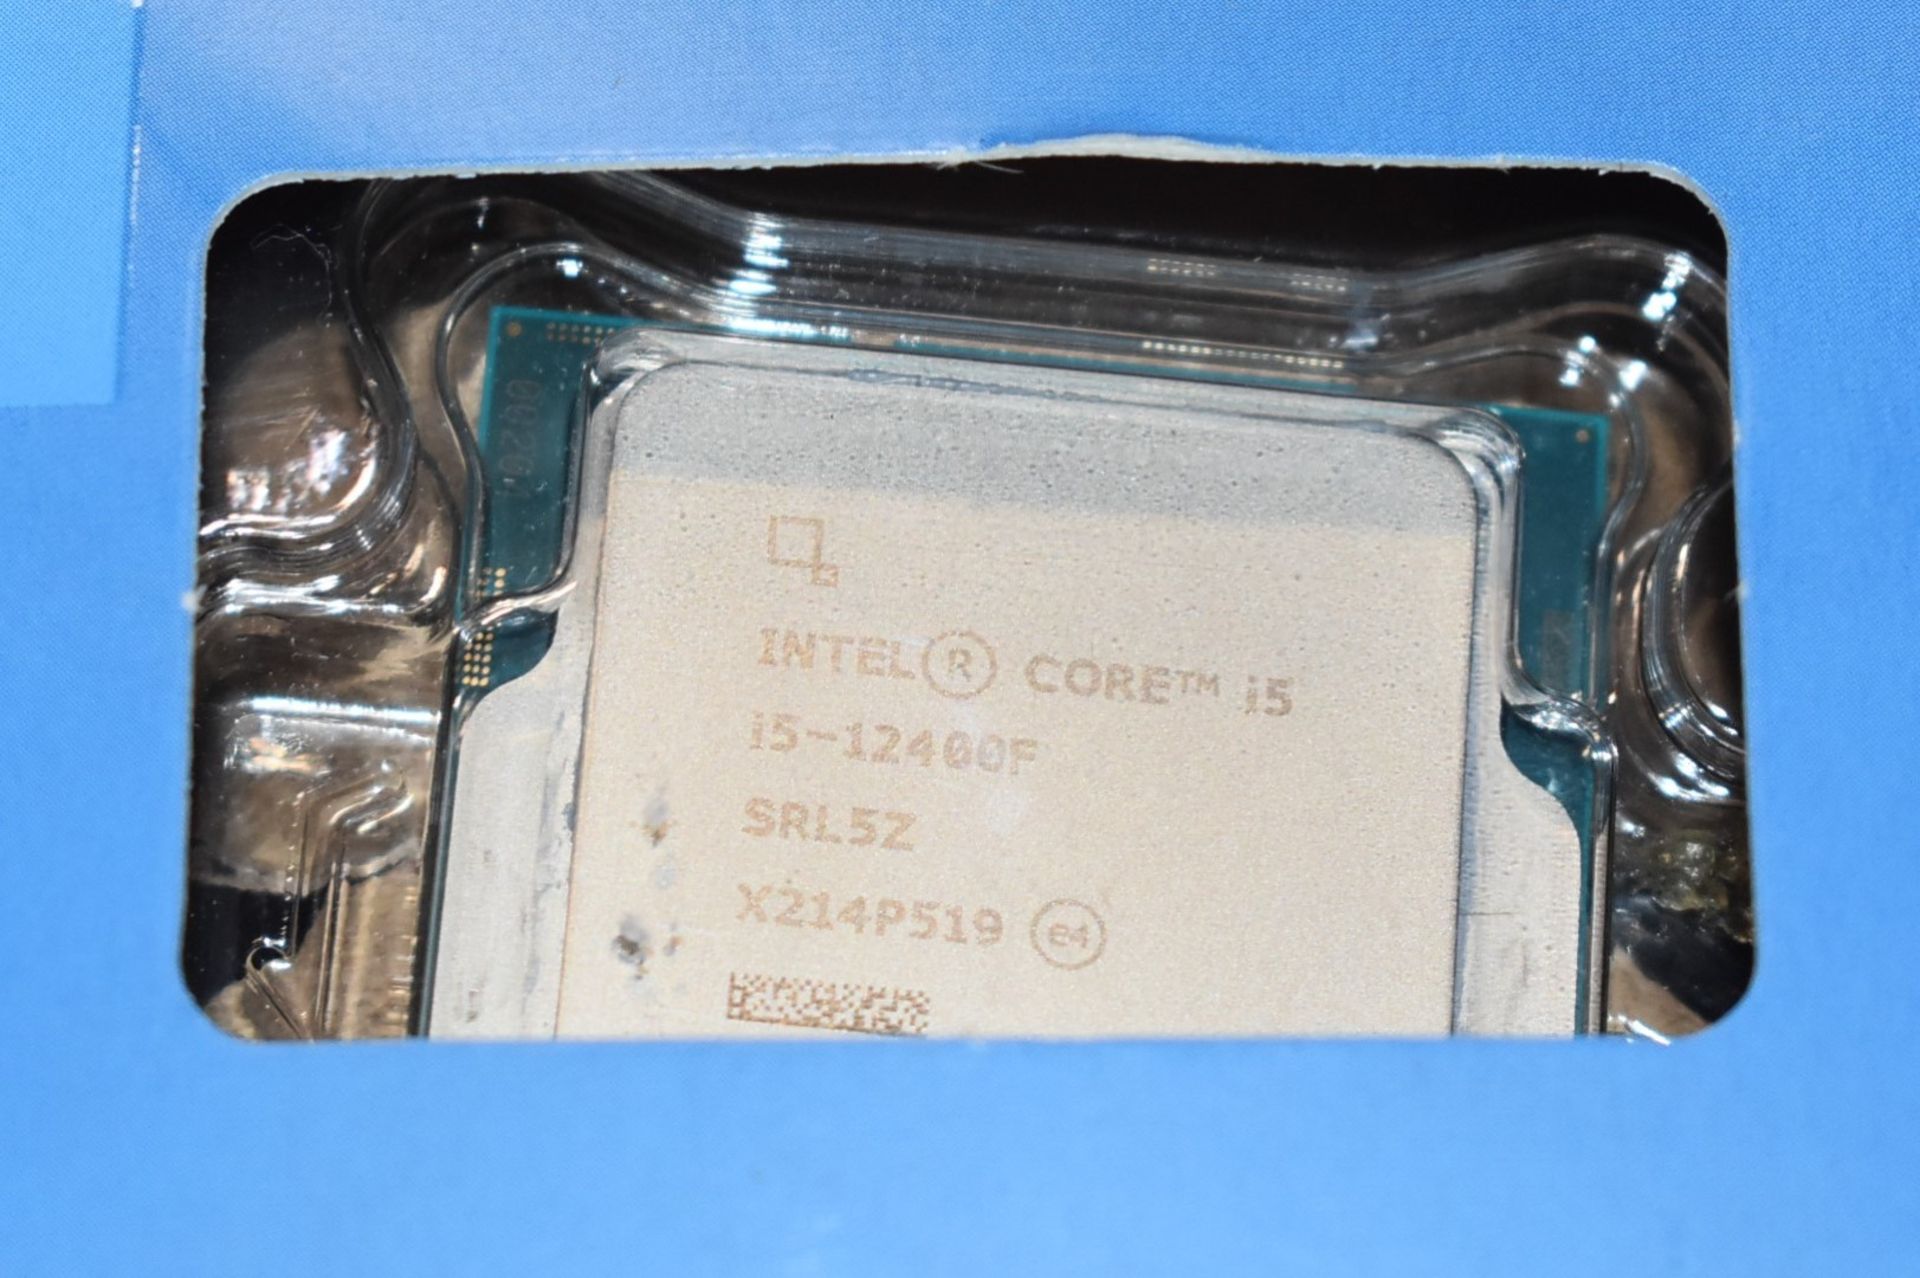 1 x Intel i5-12400F SRL5Z LGA1700 12th Gen Processor - Boxed With Heatsink and Fan - Image 4 of 4